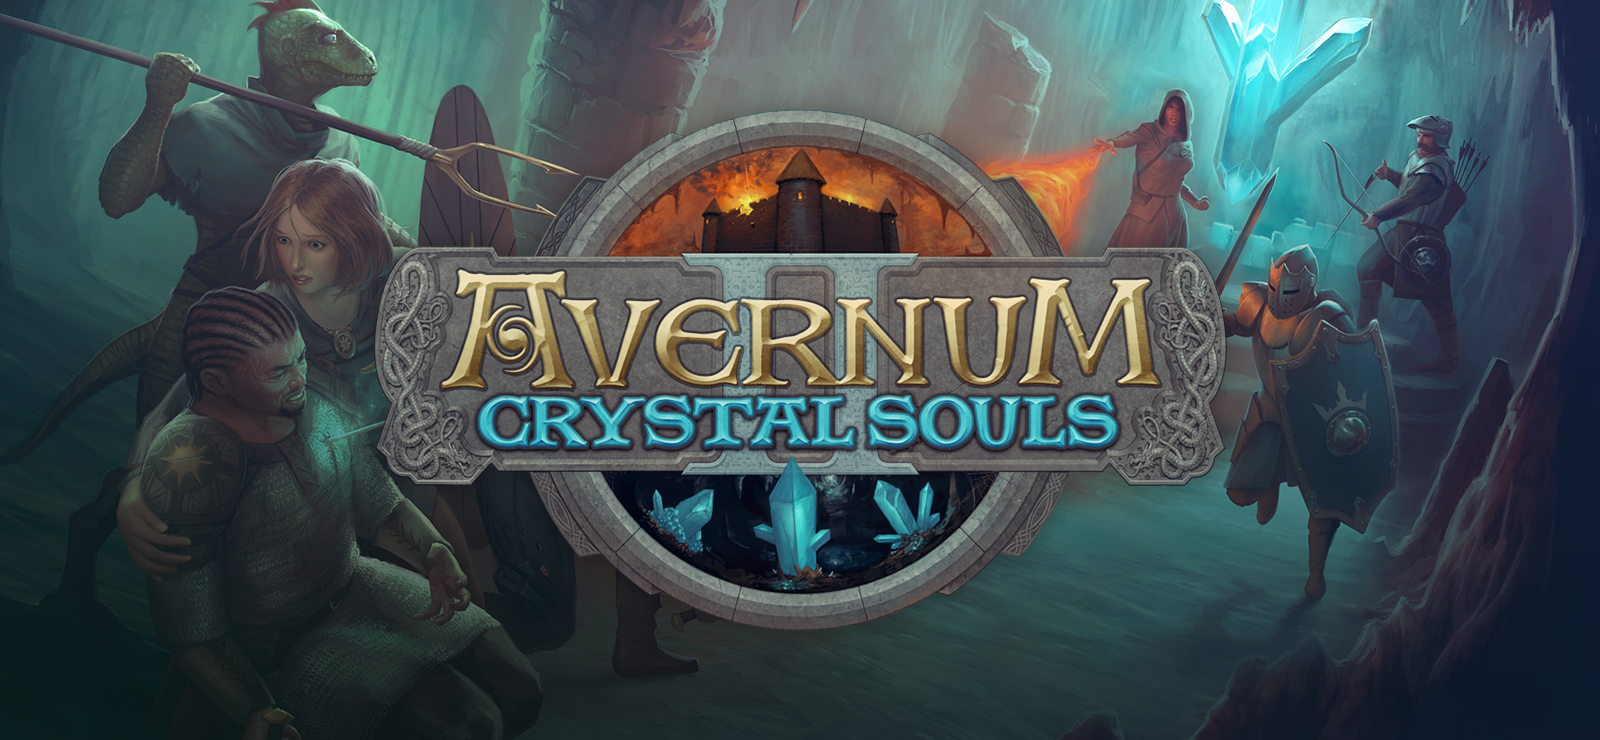 Avernum 2: Crystal Souls